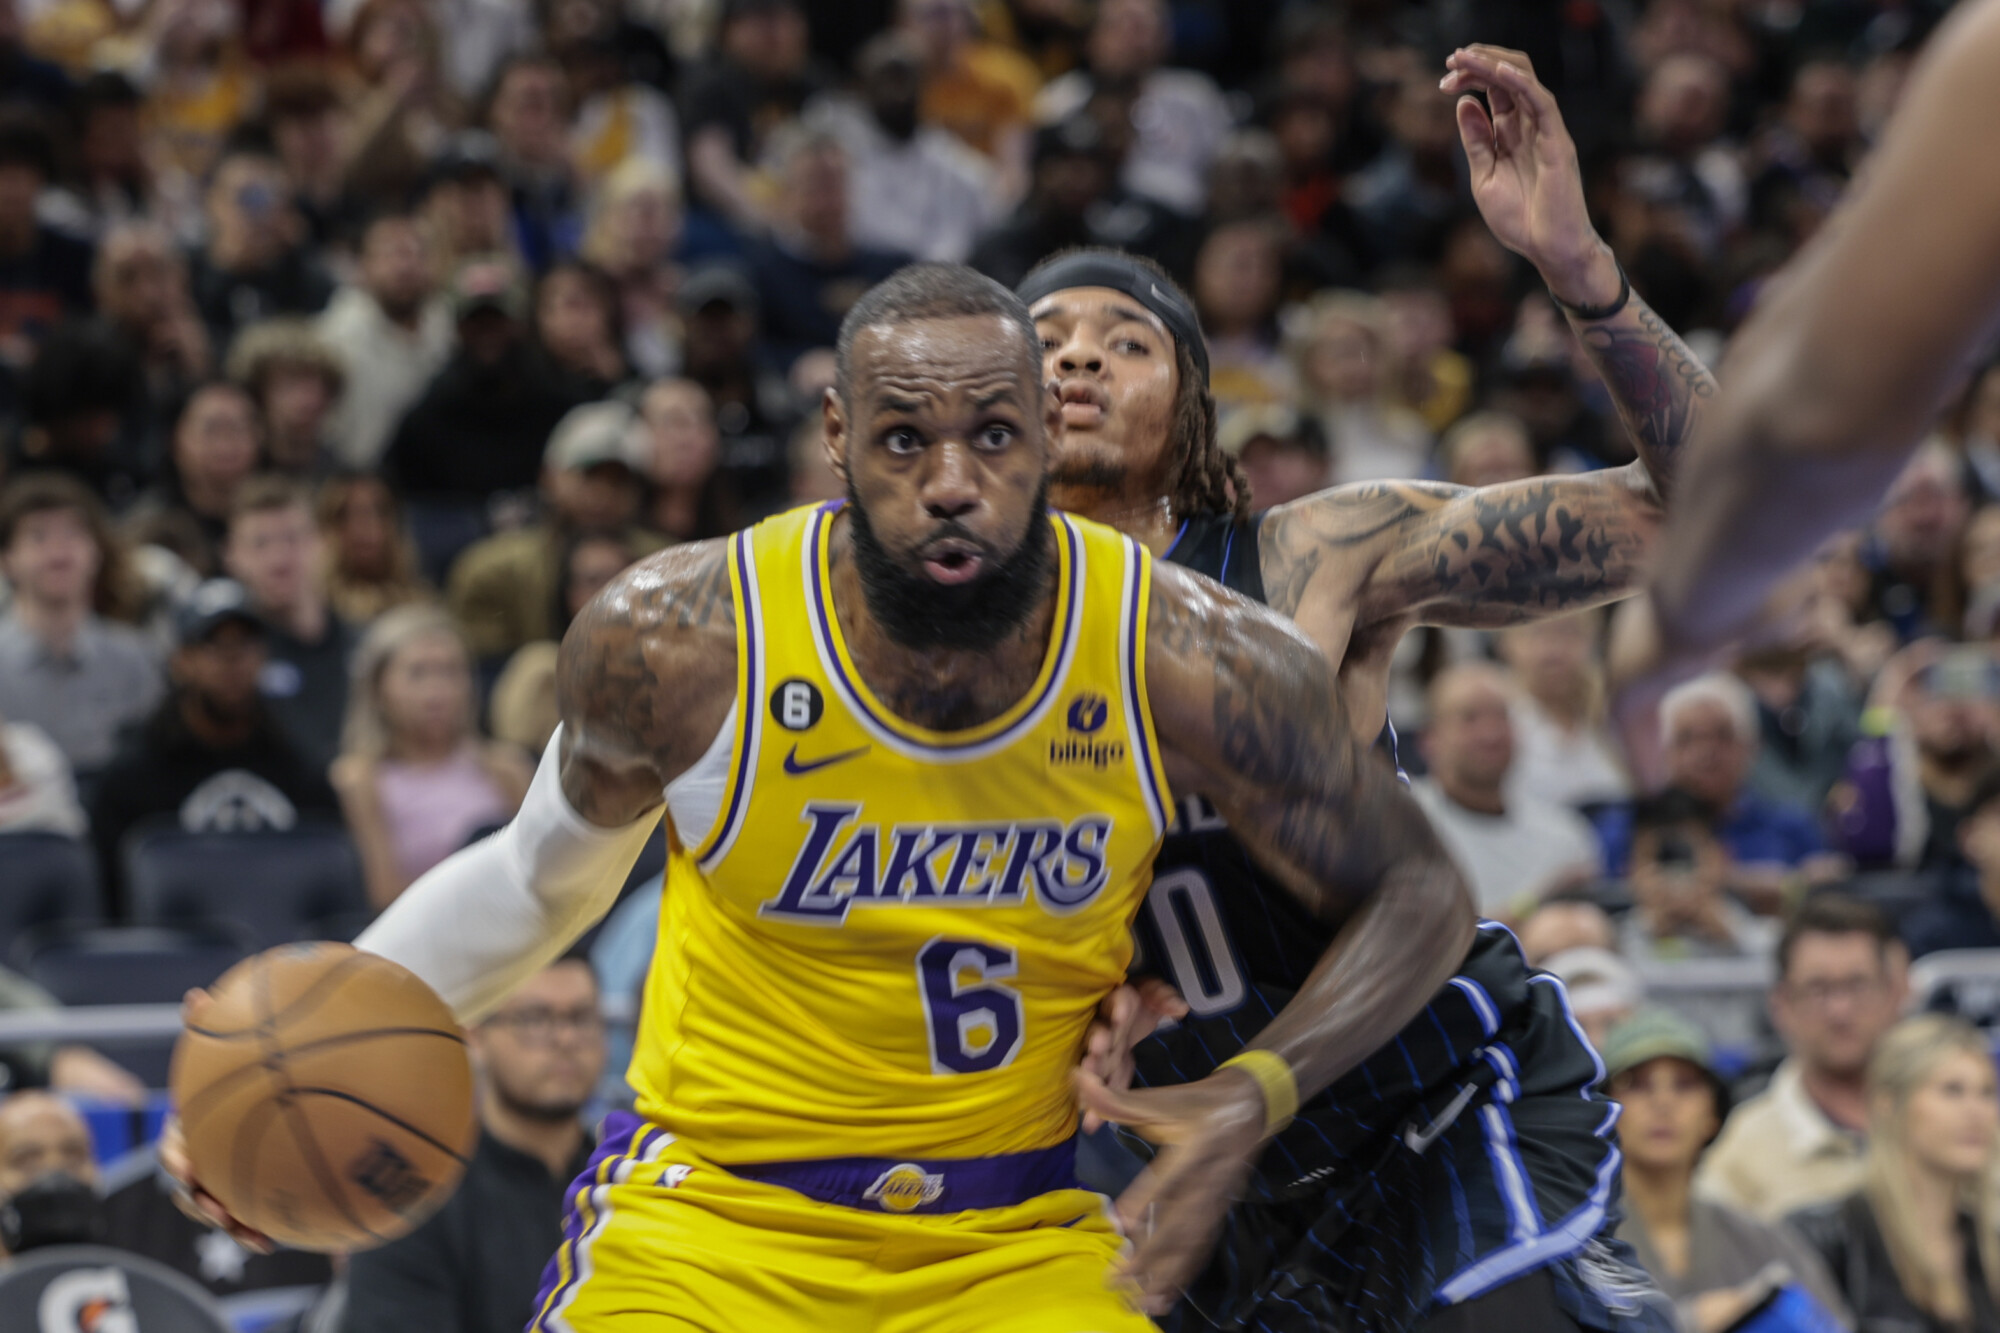 LeBron James Los Angeles Lakers Association Edition 2022/23 Older